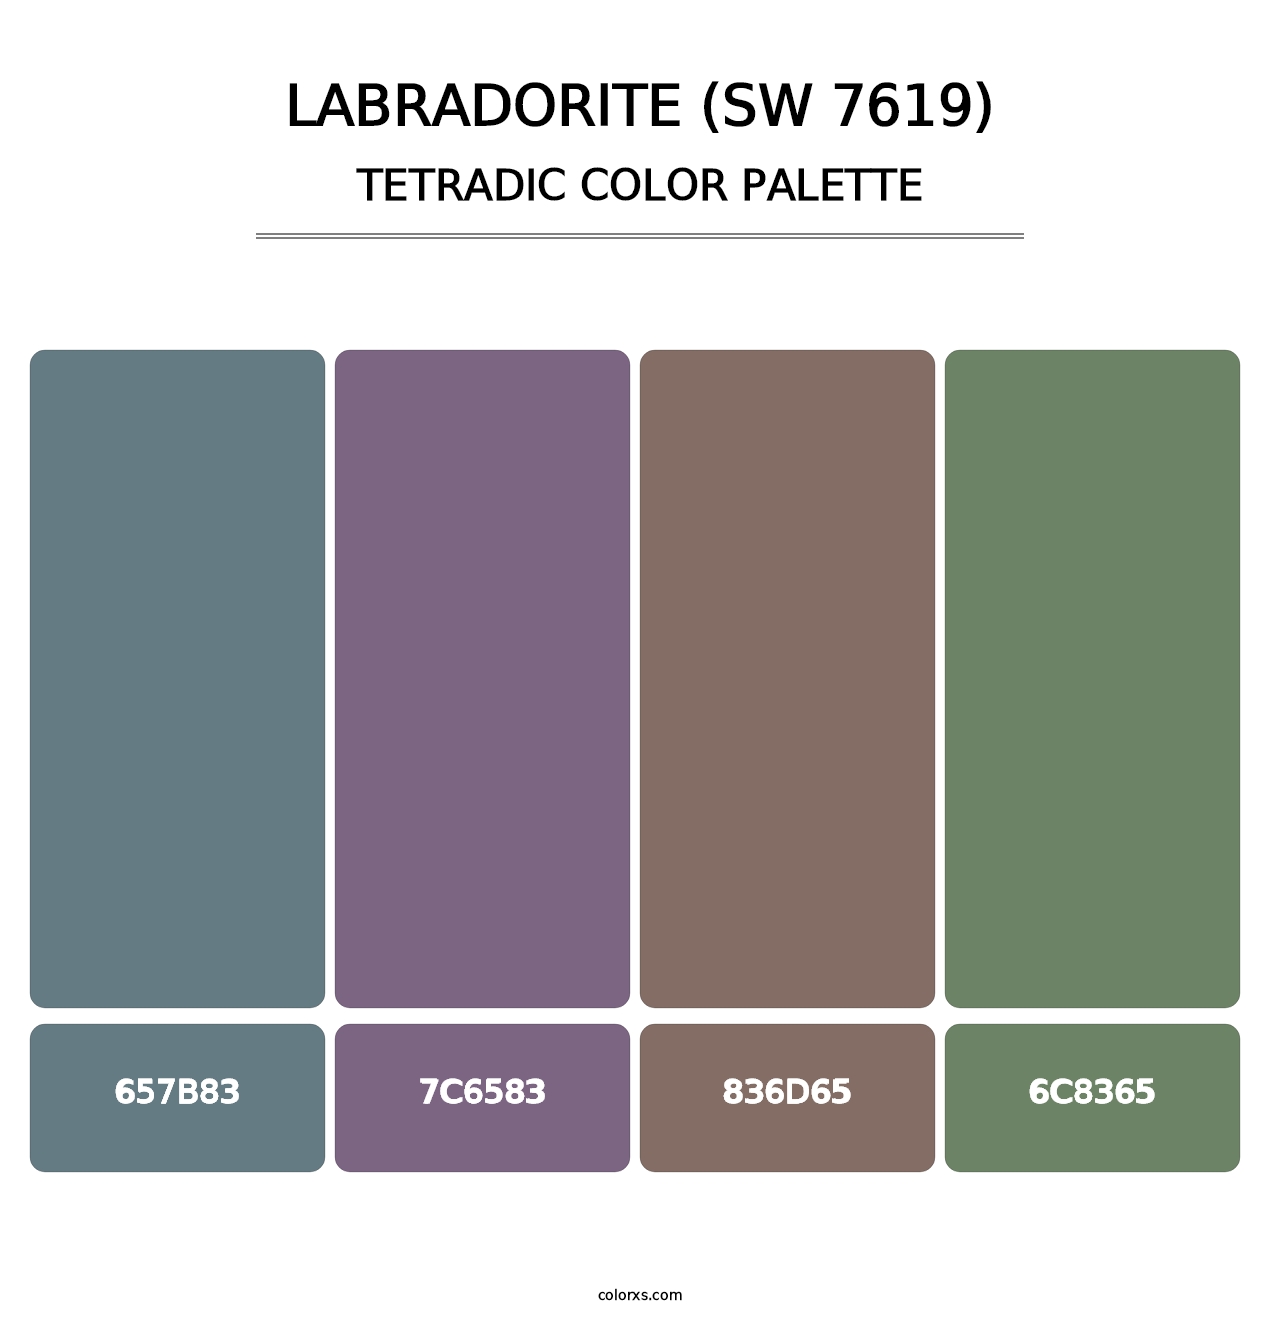 Labradorite (SW 7619) - Tetradic Color Palette